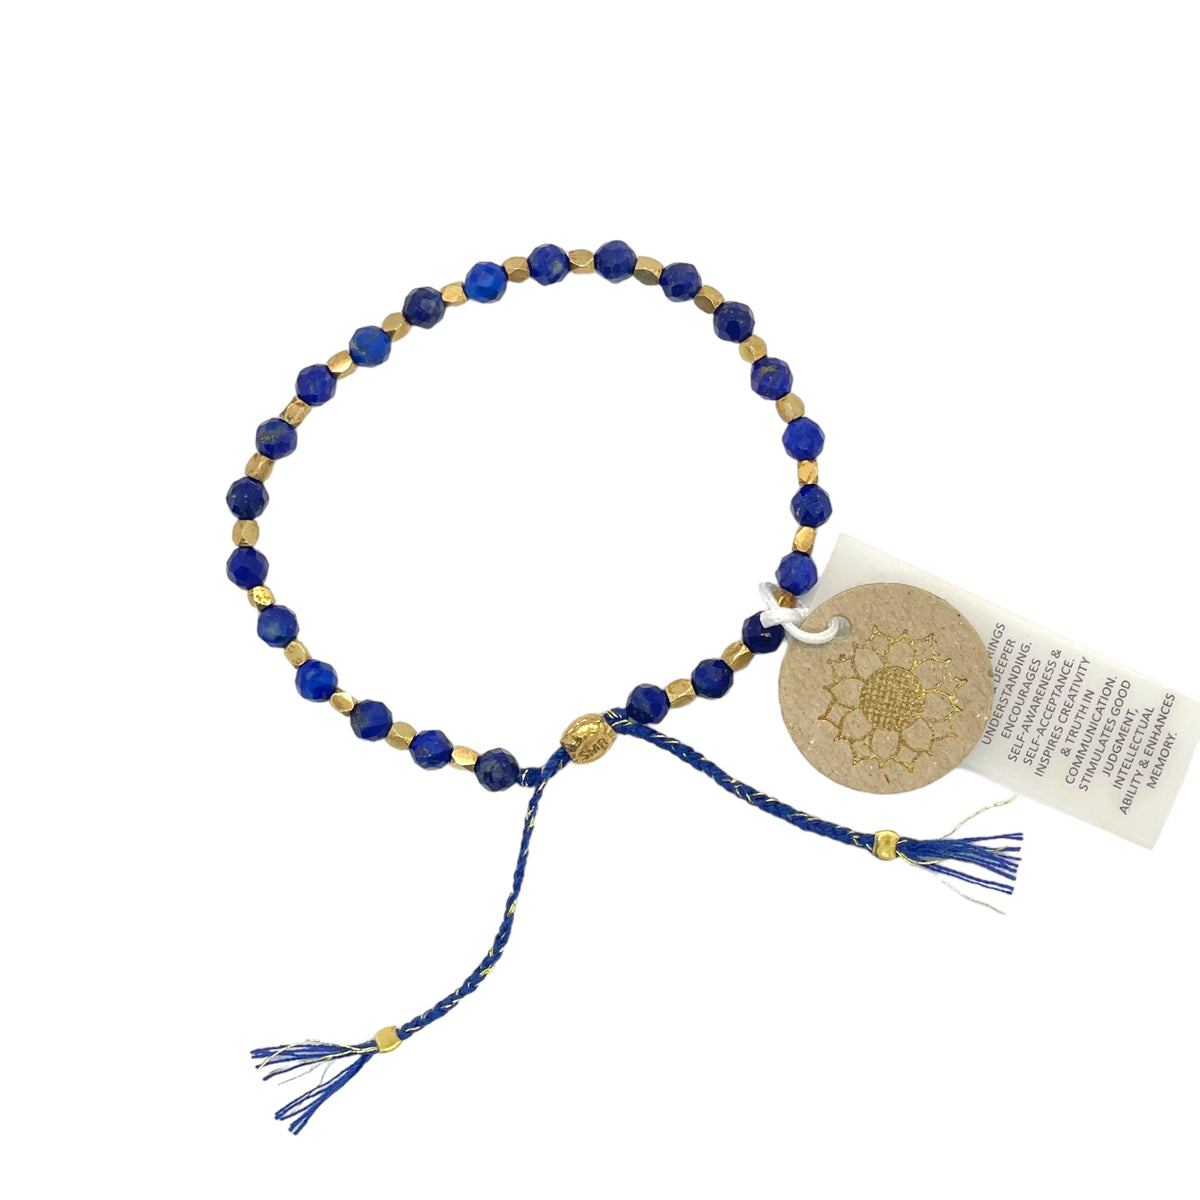 smr // lapis lazuli // Signature Collection bracelet